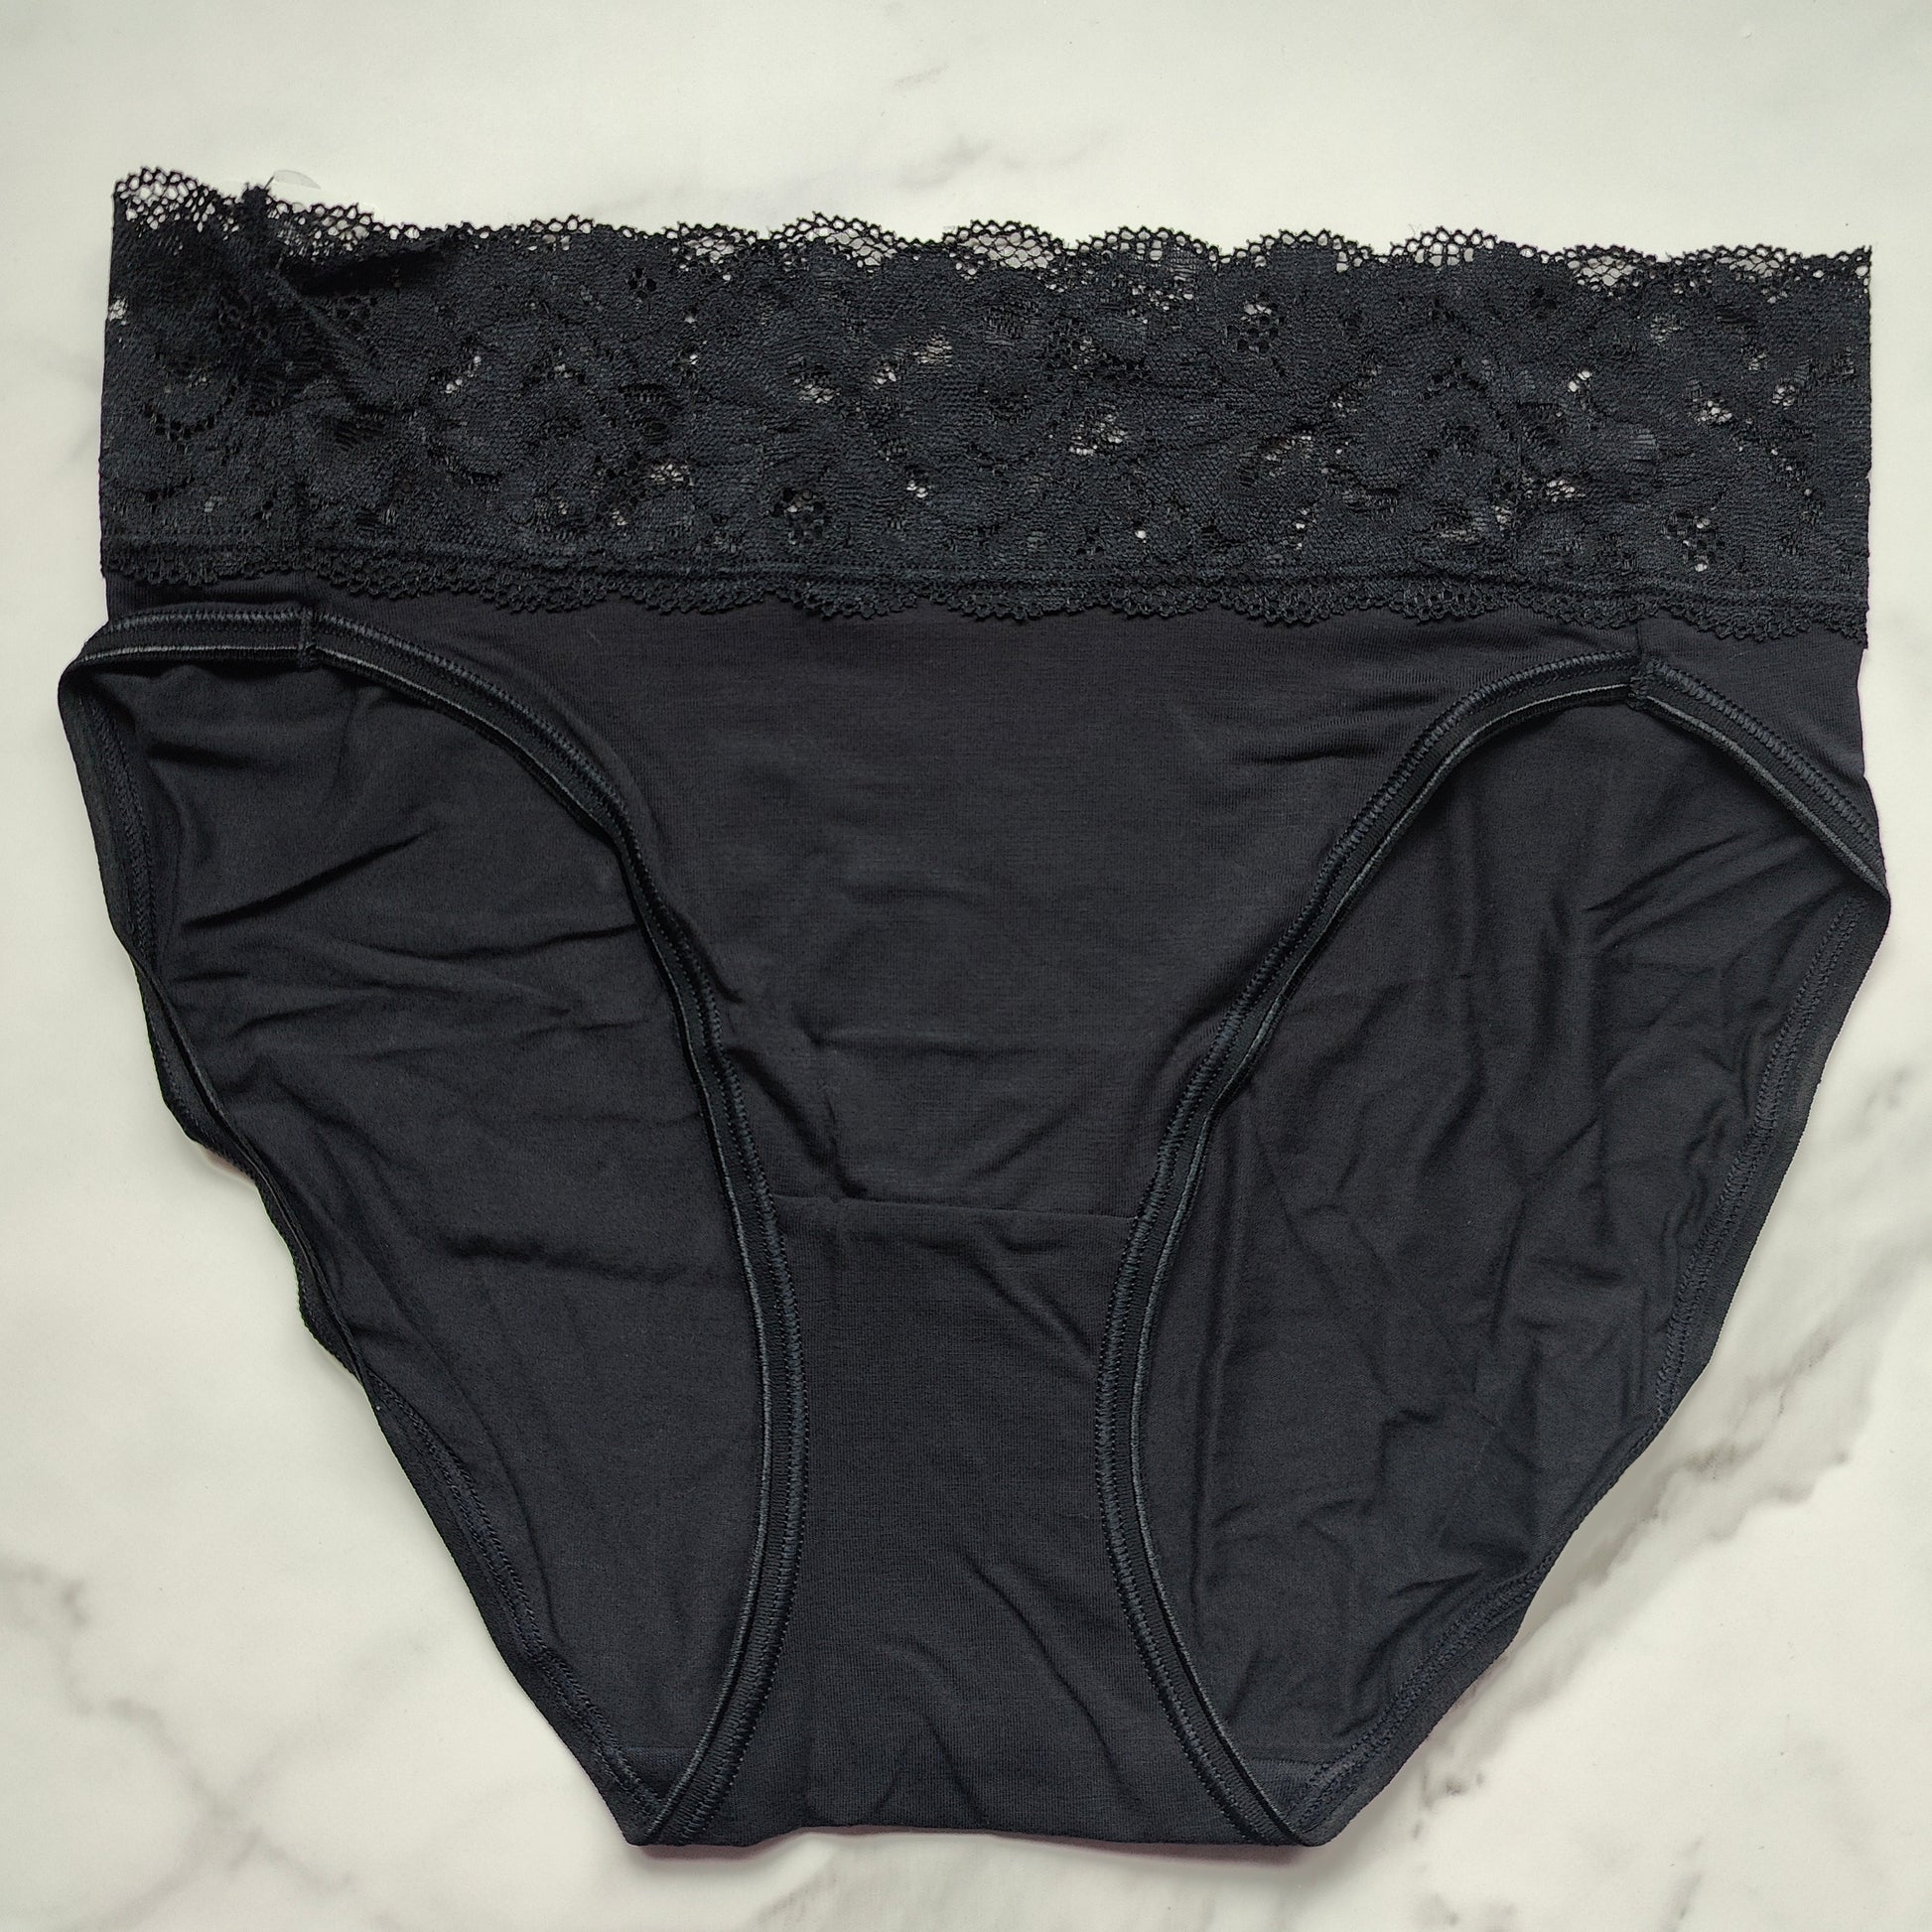 Soma Embraceable Signature Lace High-Leg Brief Underwear, Black, size S